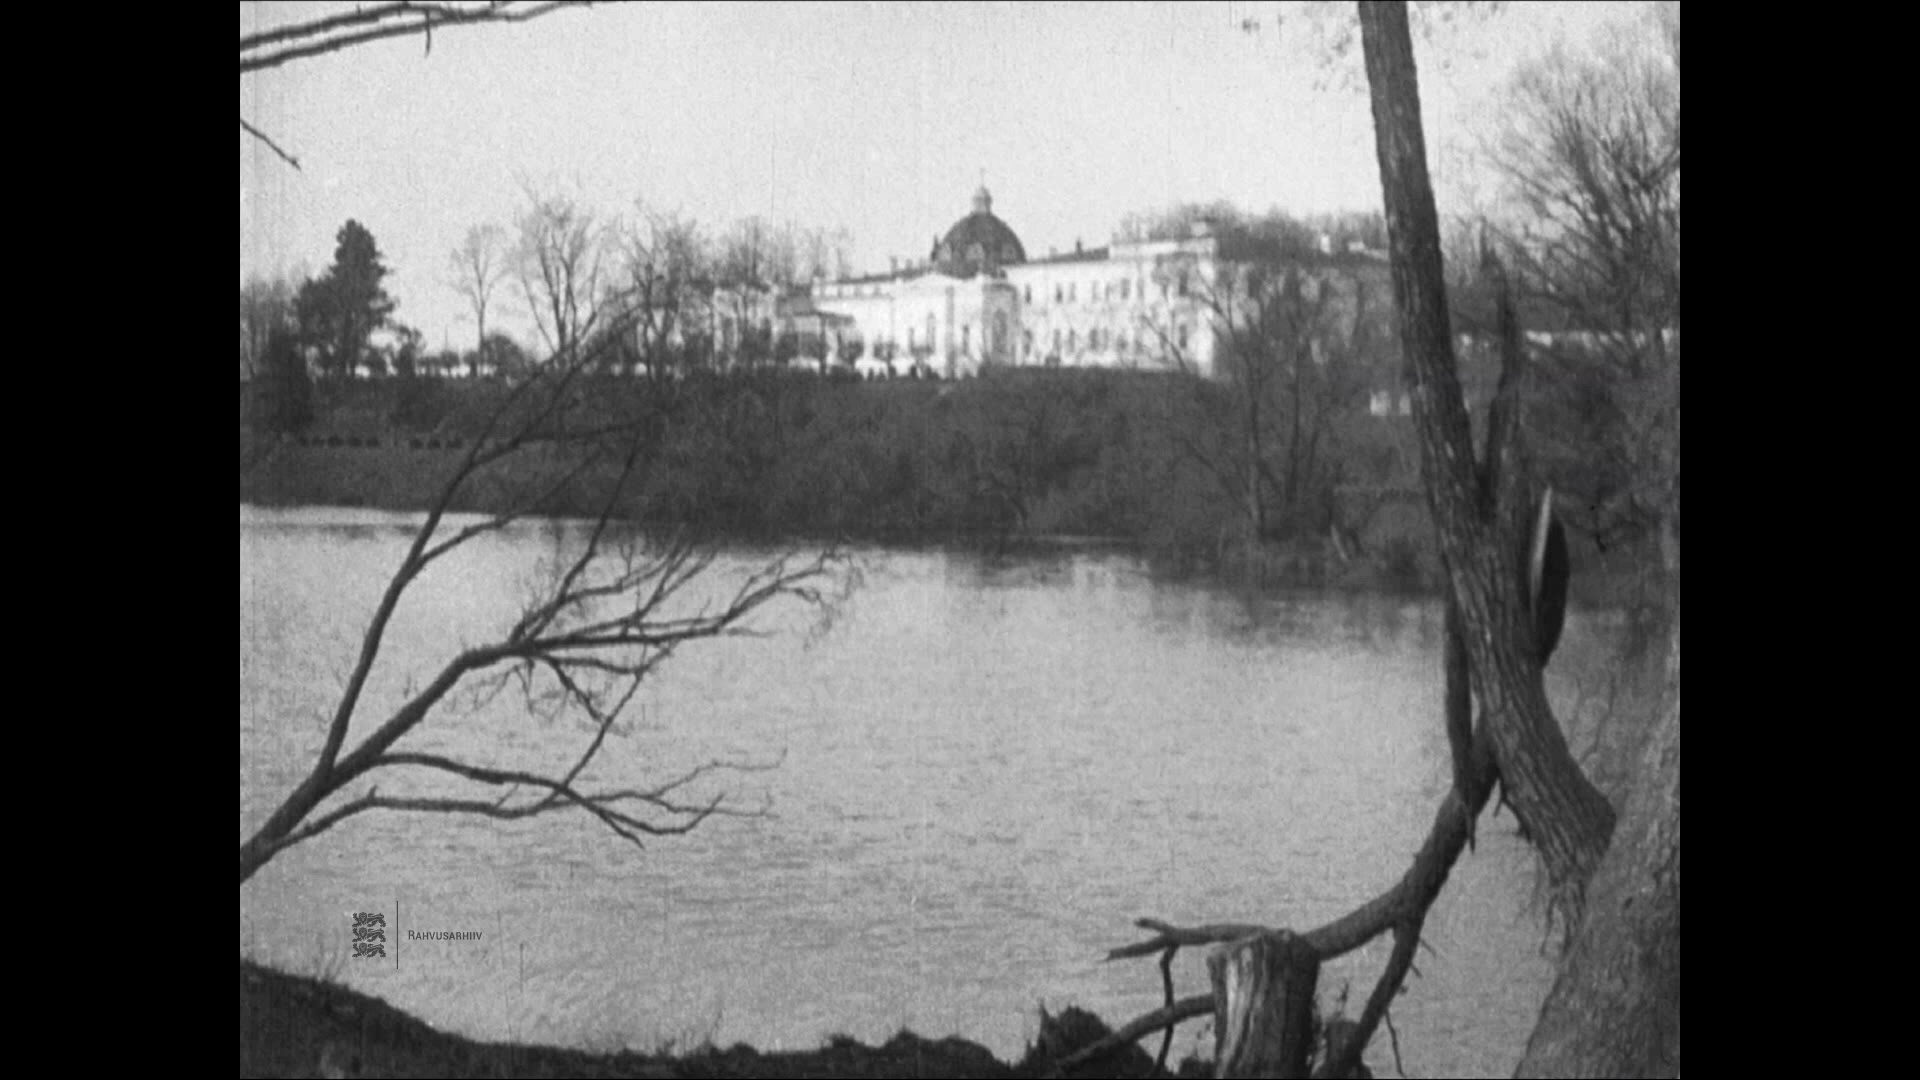 Film "Tartu city and surroundings" 0:04:21.971